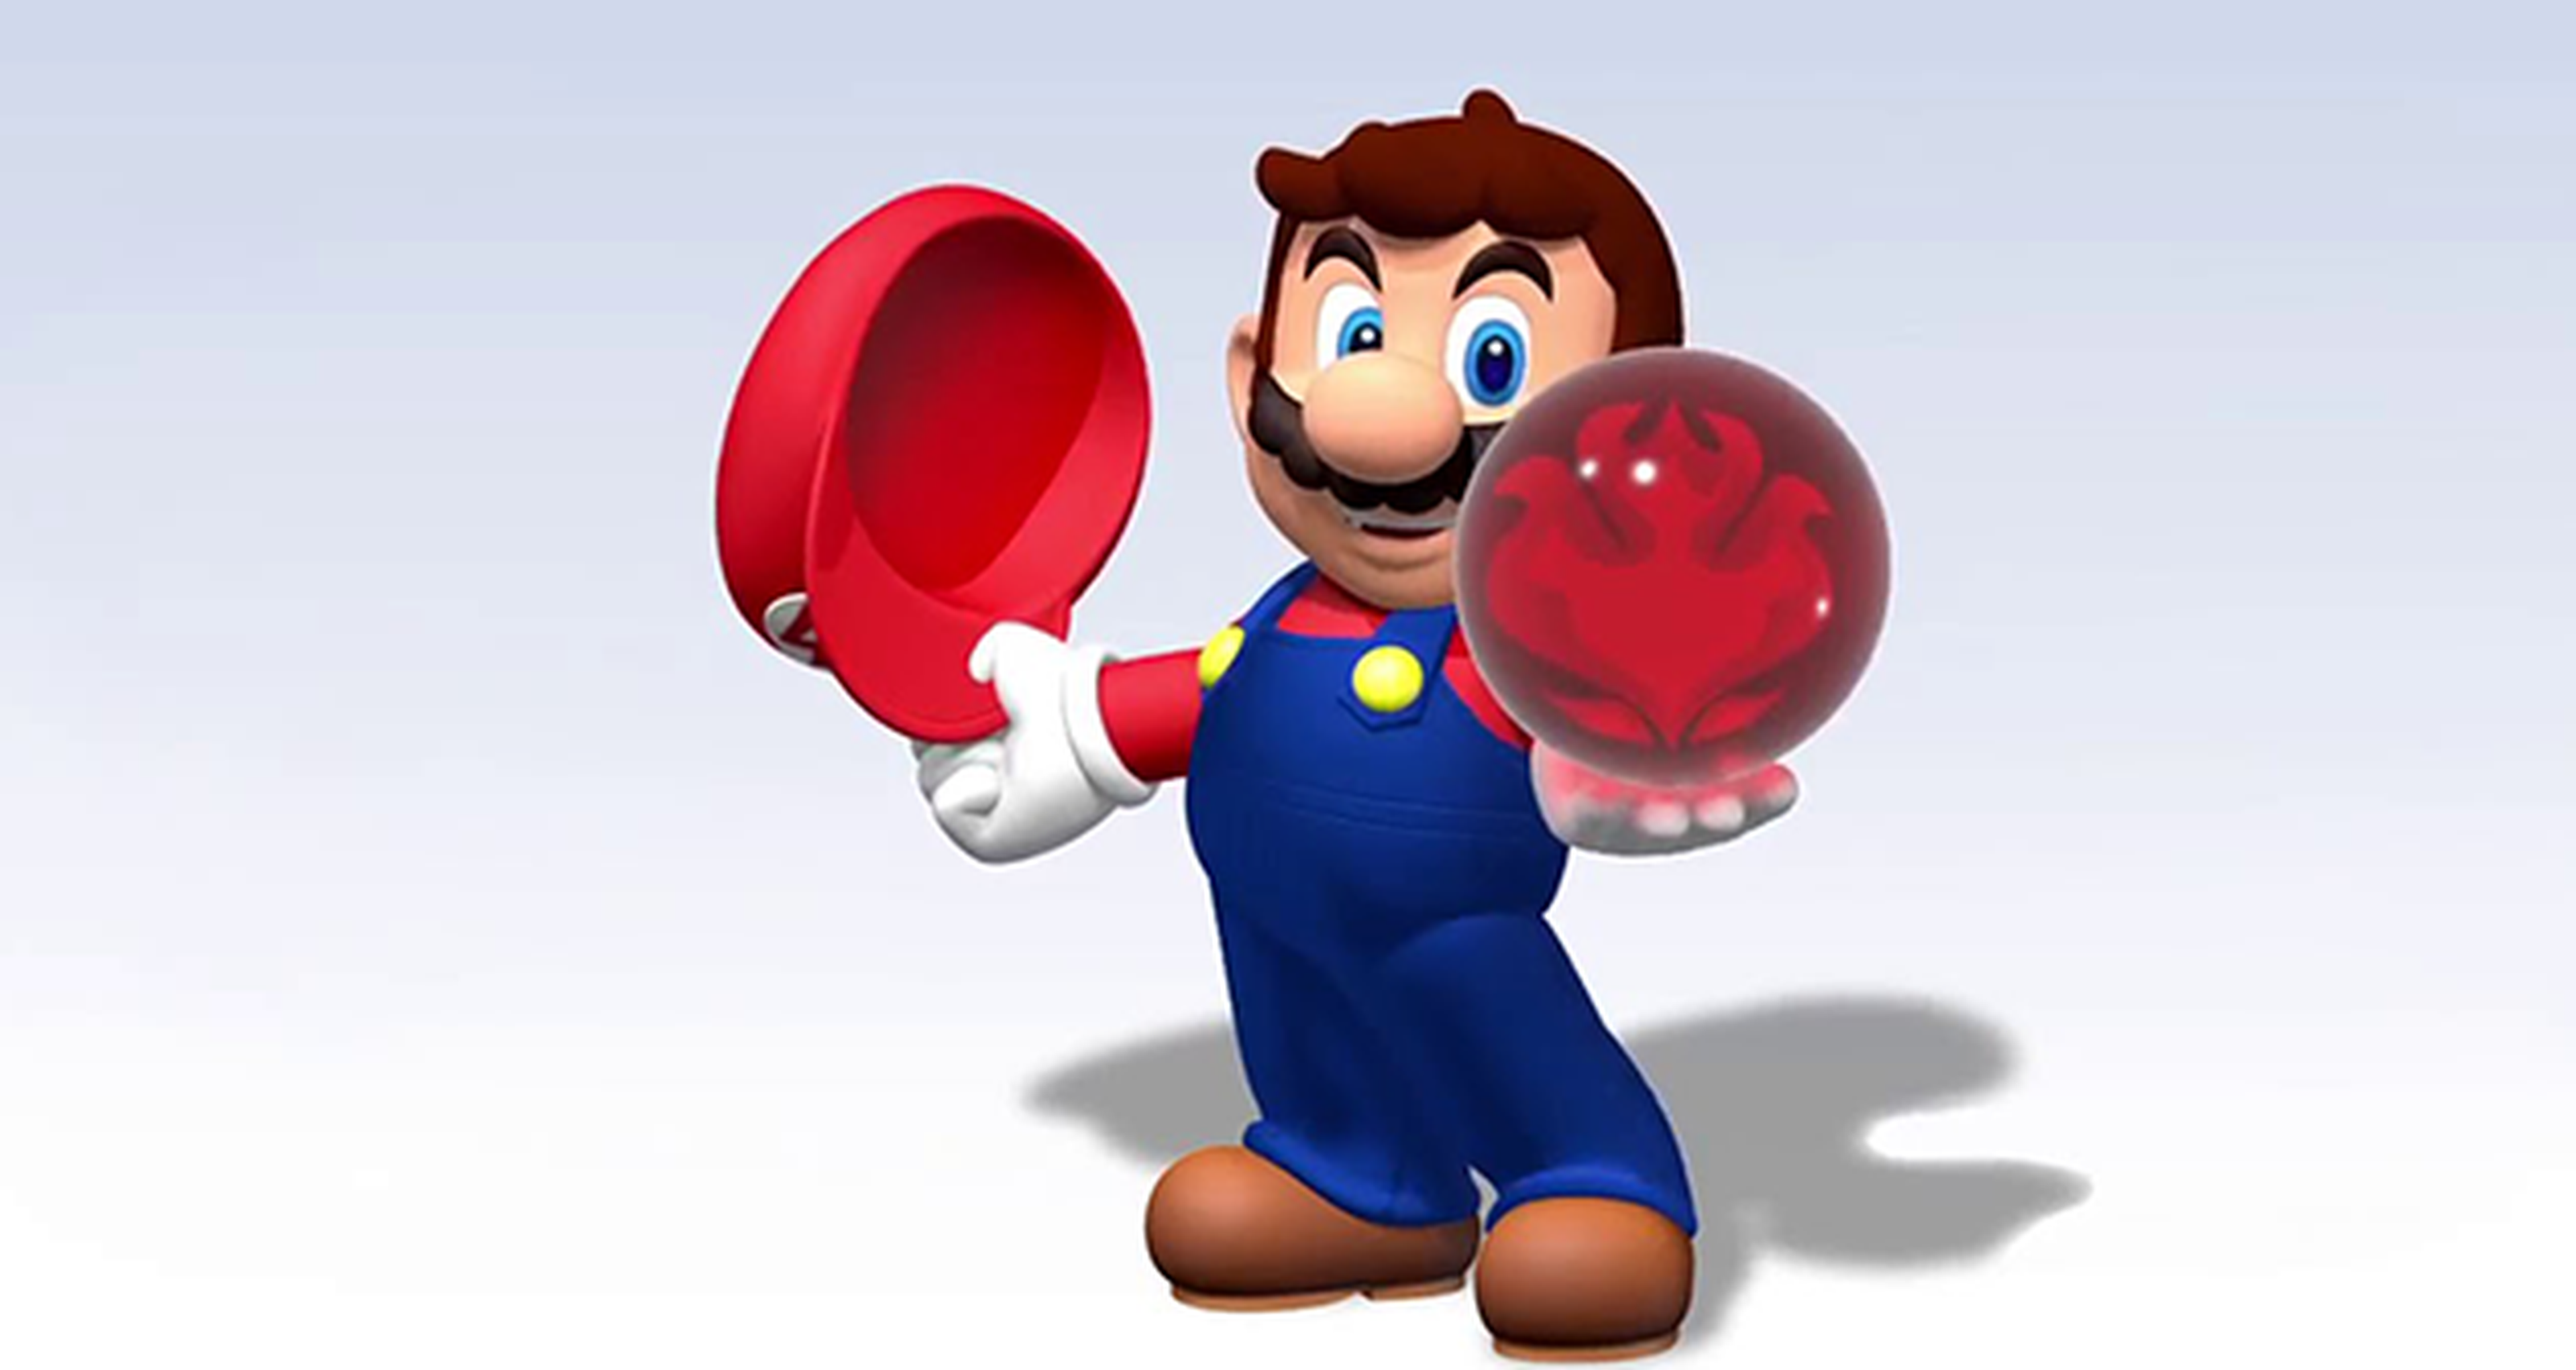 Puzzle & Dragons: Super Mario Bros. Edition is Coming to Nintendo 3DS